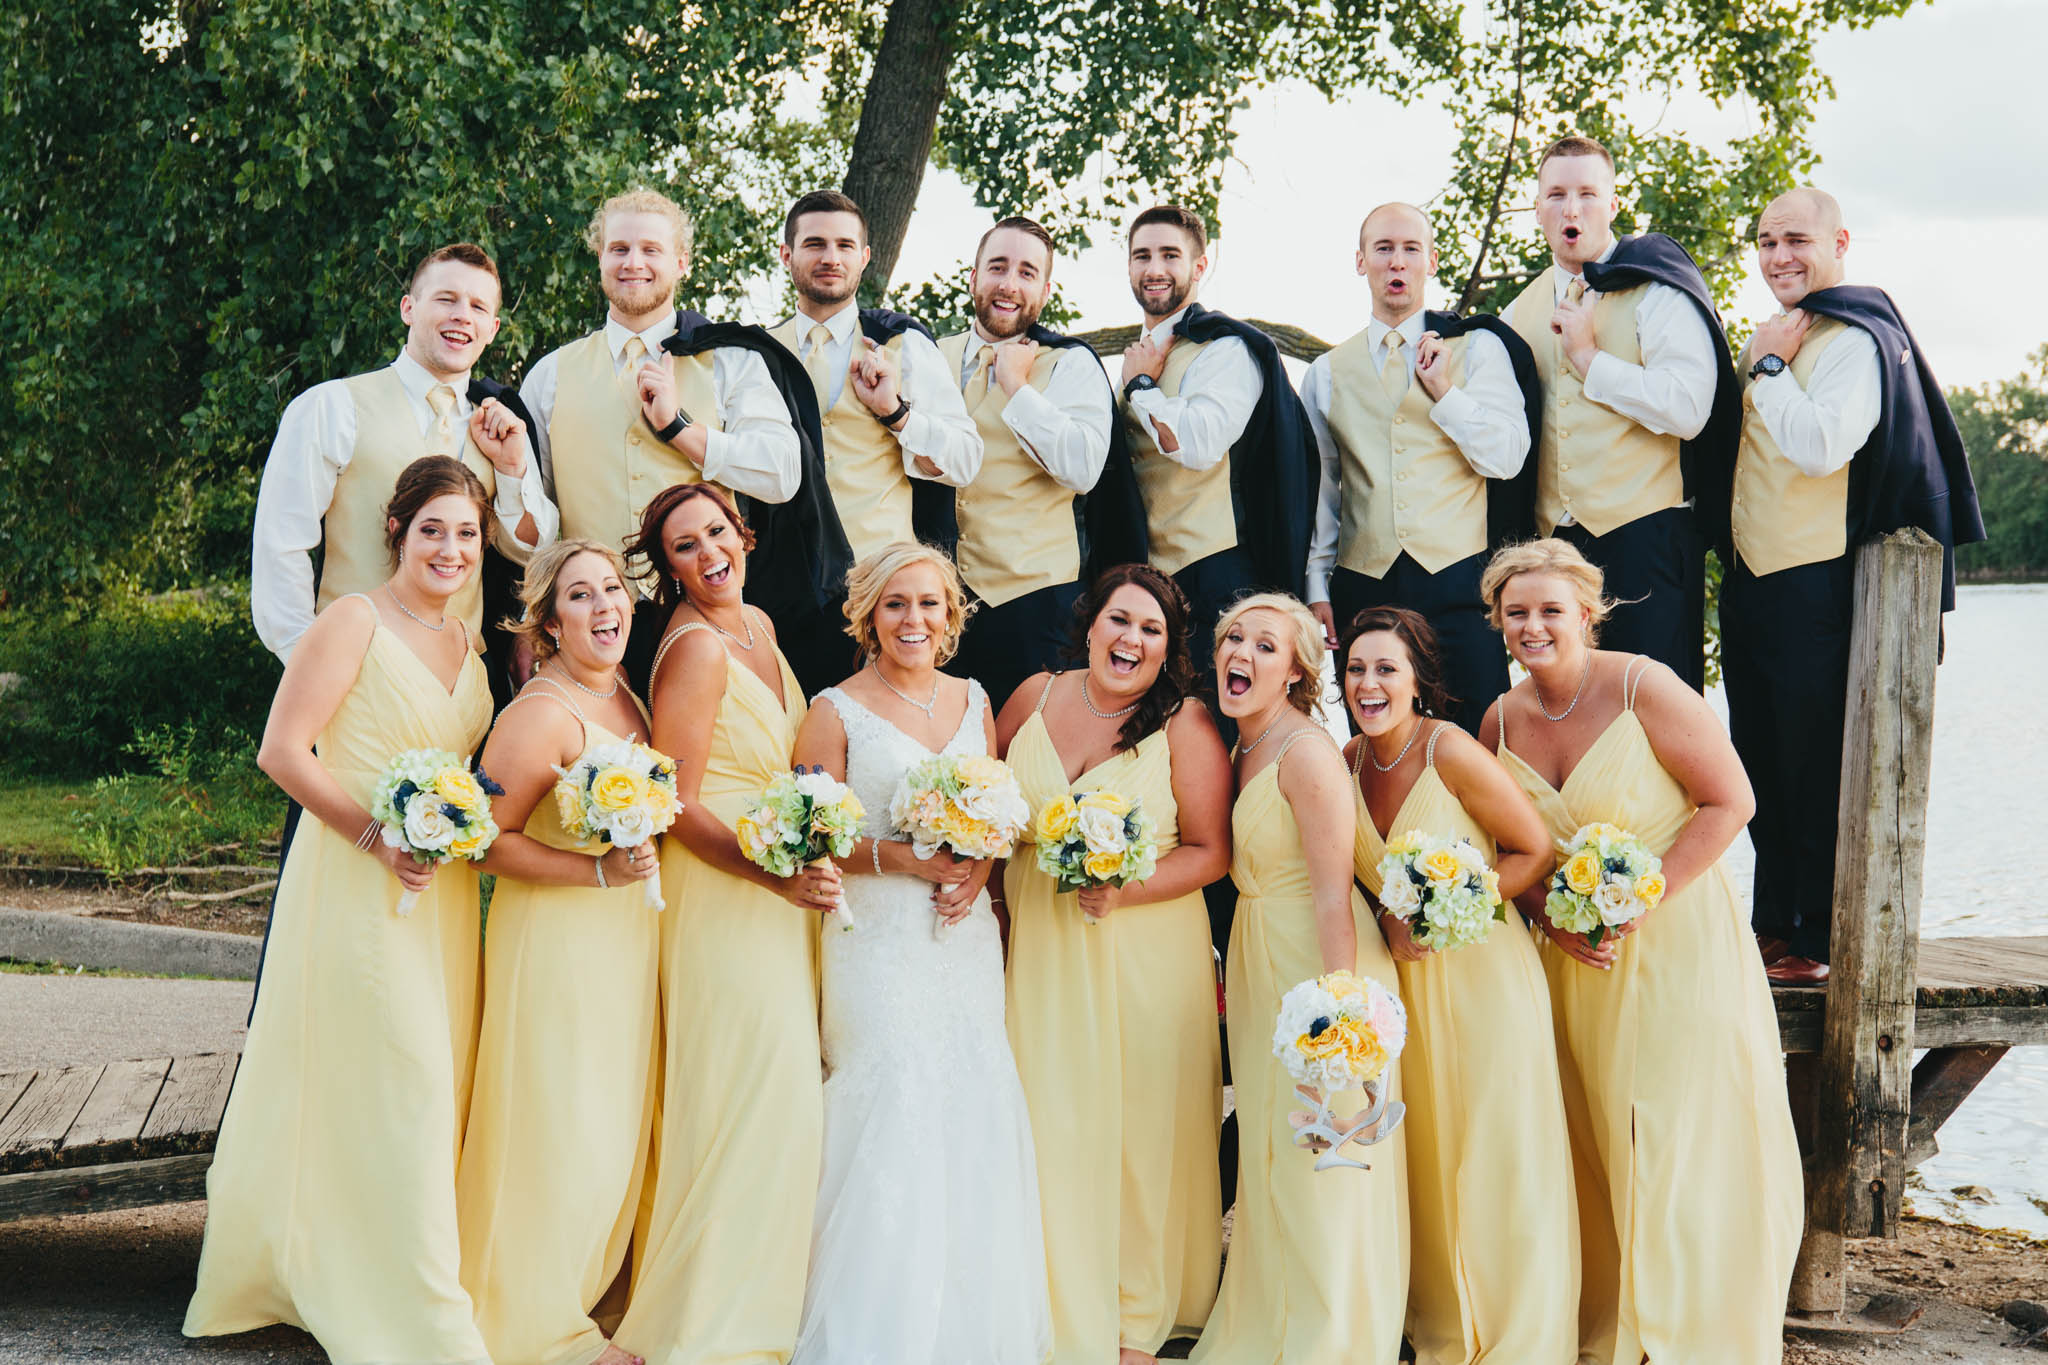 Jillian VanZytveld Photography - Grand Rapids Lifestyle Wedding Photography - 146.jpg